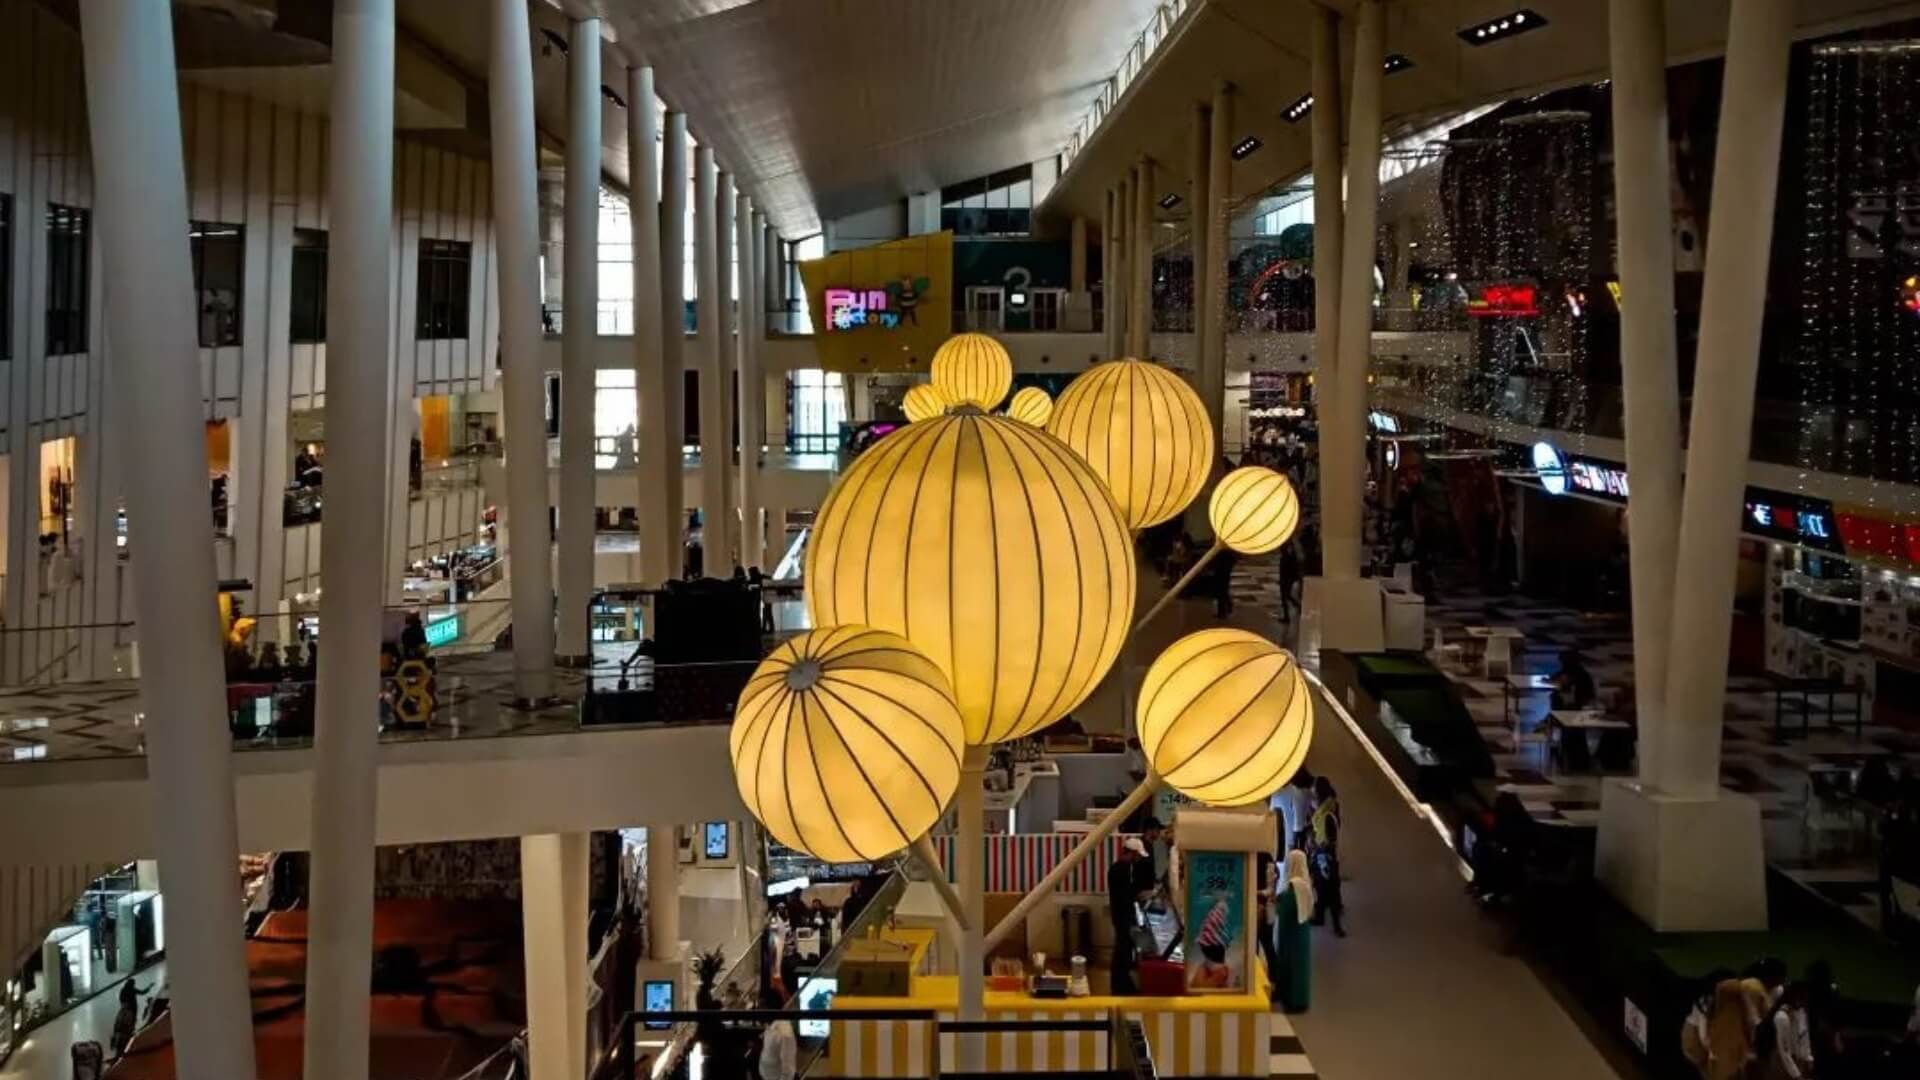 Ramadan - Emporium Mall